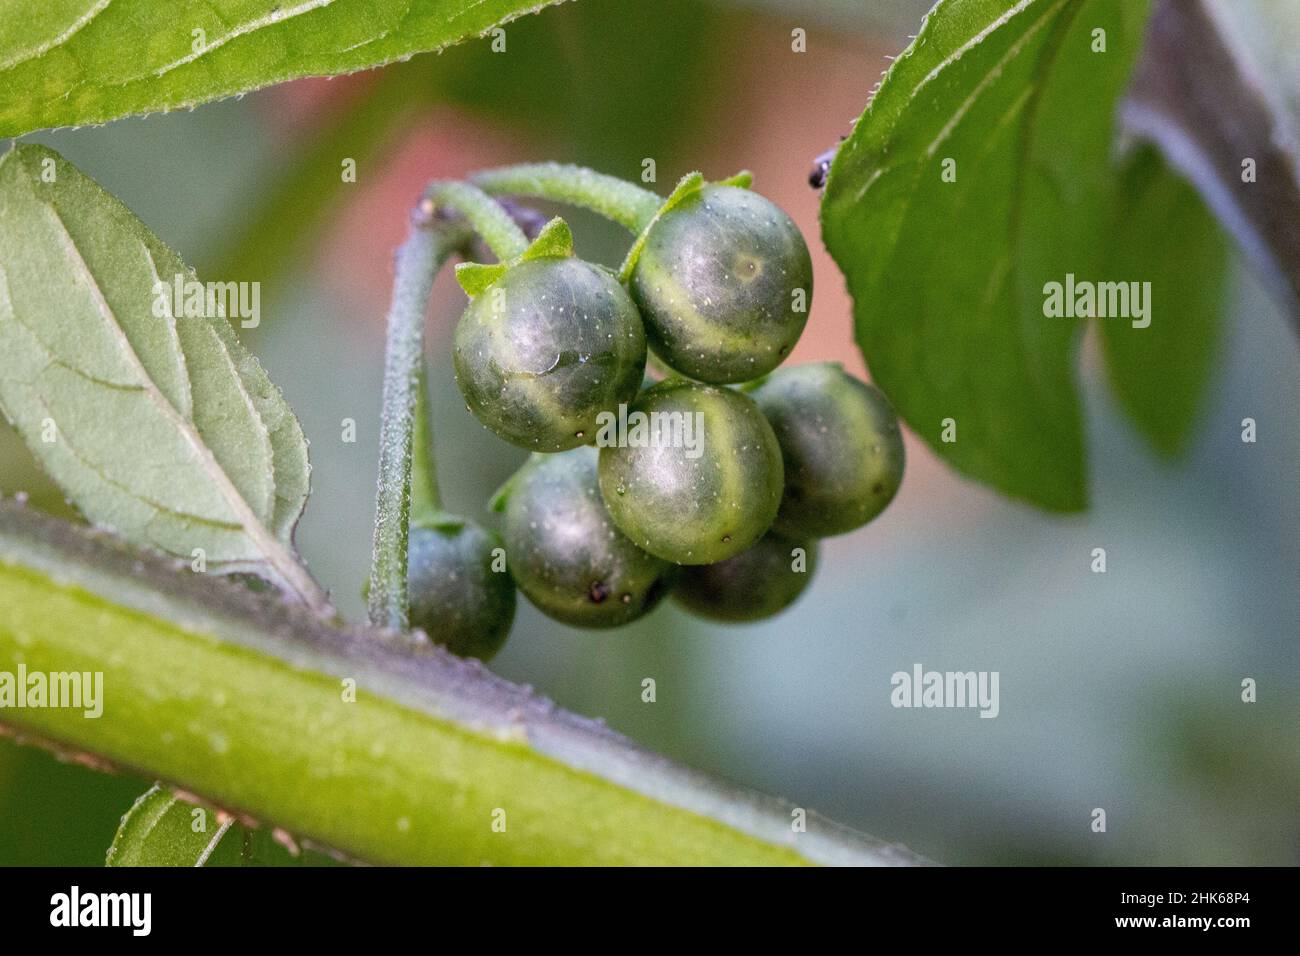 Bunch of Green Unripe Black or Common Nightshade (Solanum nigrum) berries Stock Photo